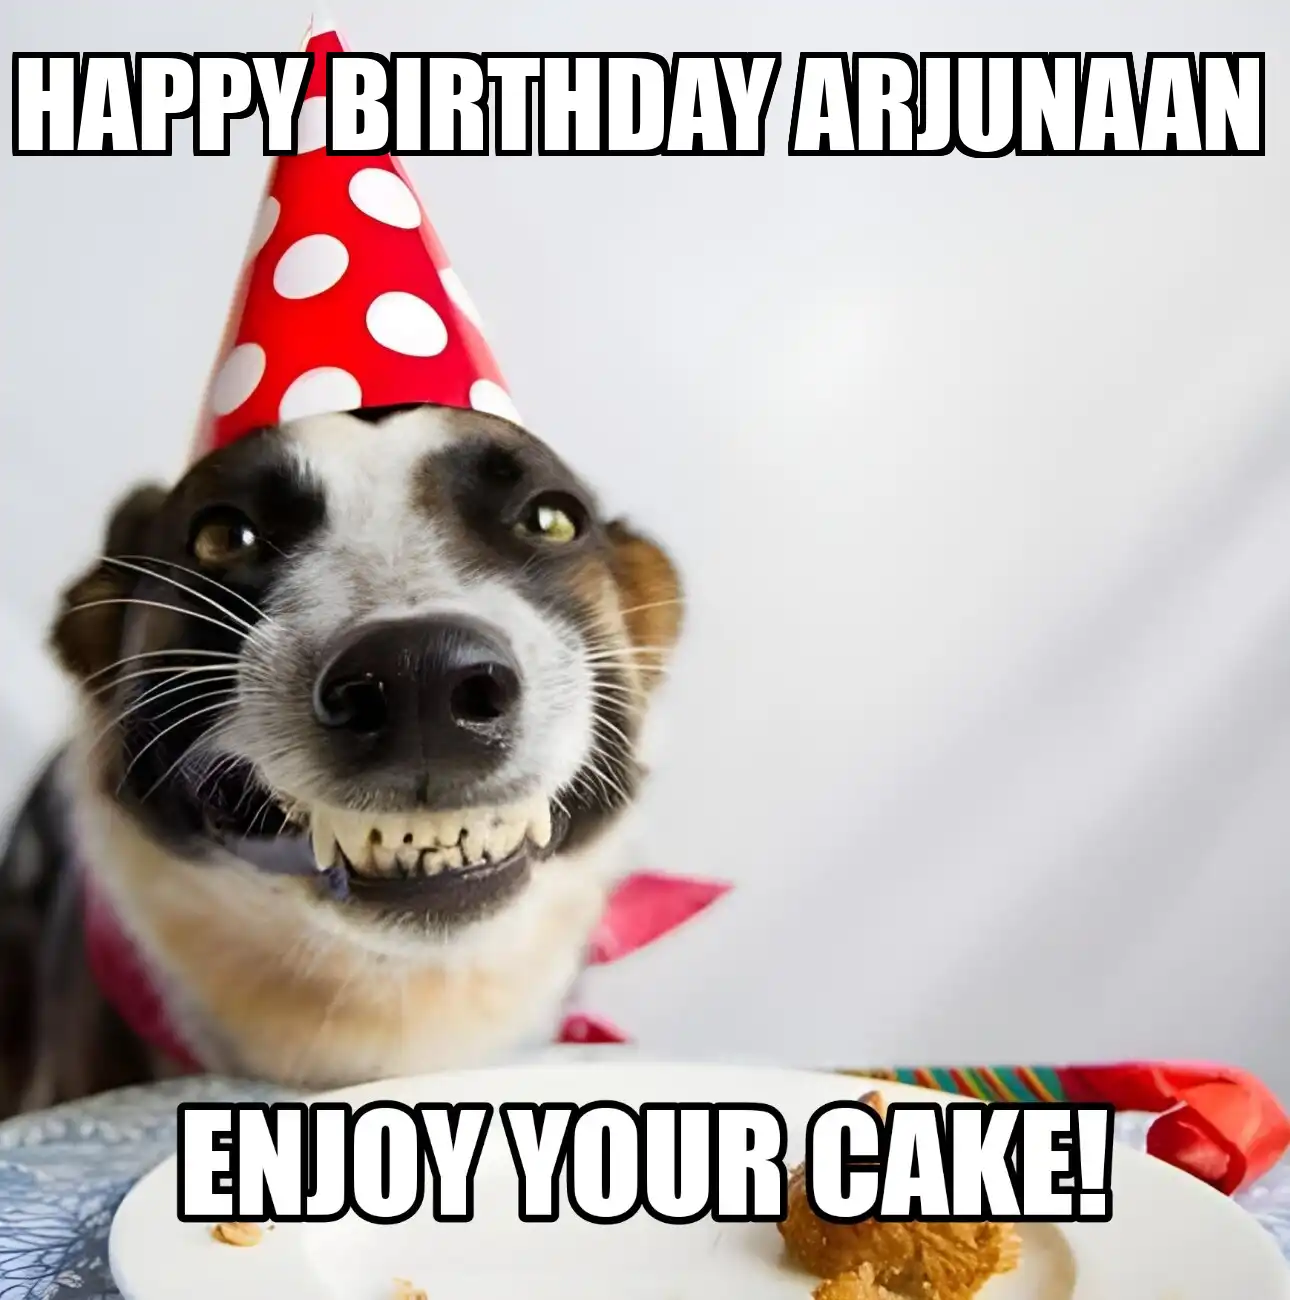 Happy Birthday Arjunaan Enjoy Your Cake Dog Meme